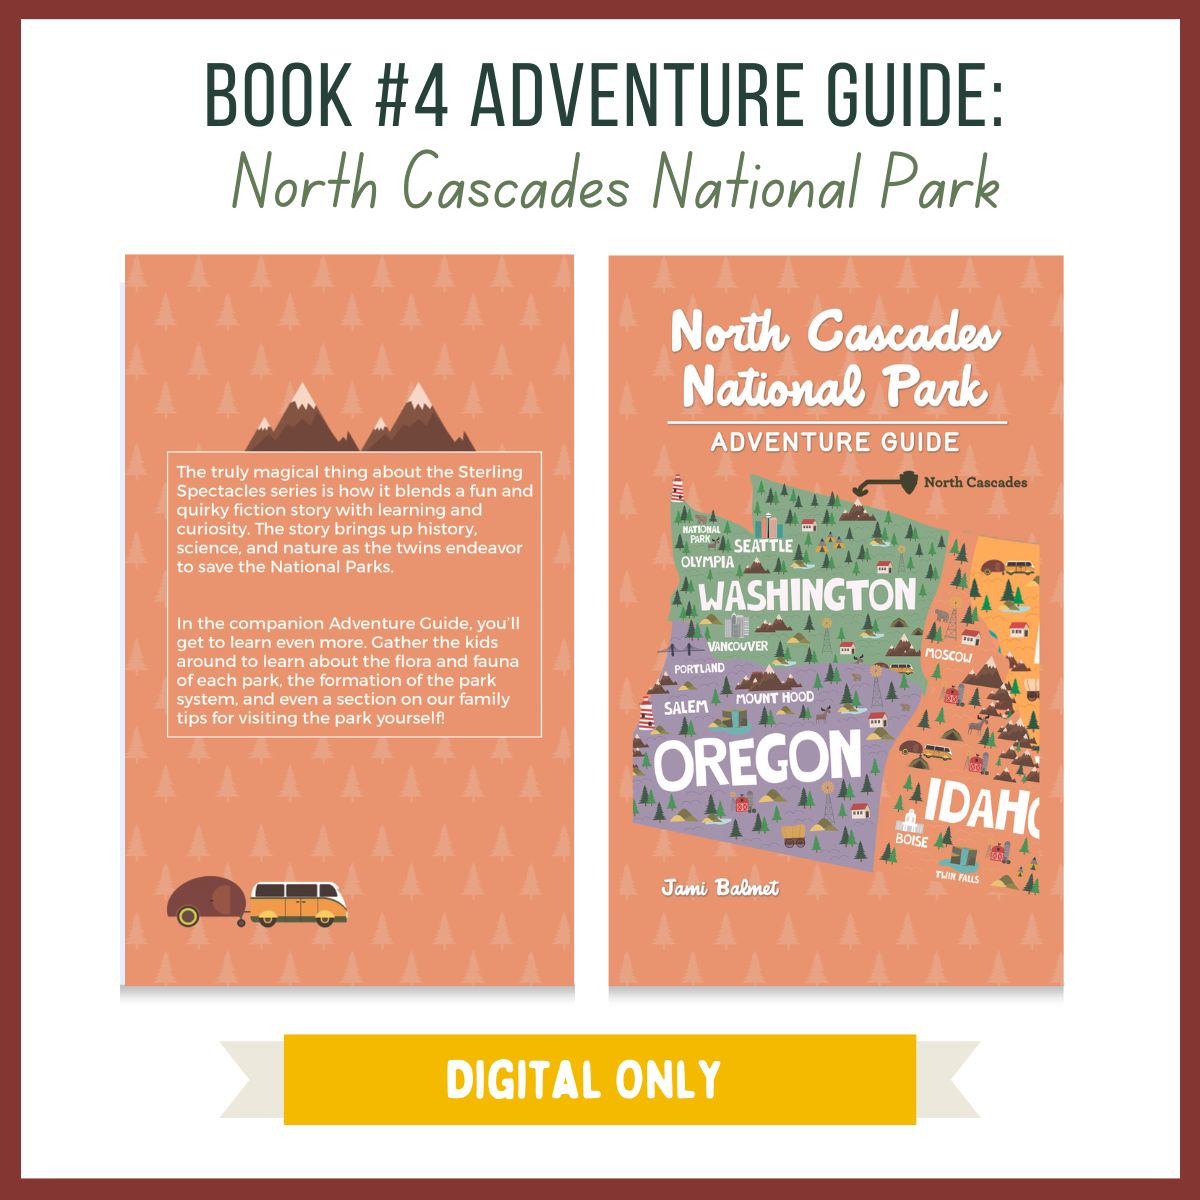 Book #4: Adventure Guide - DIGITAL